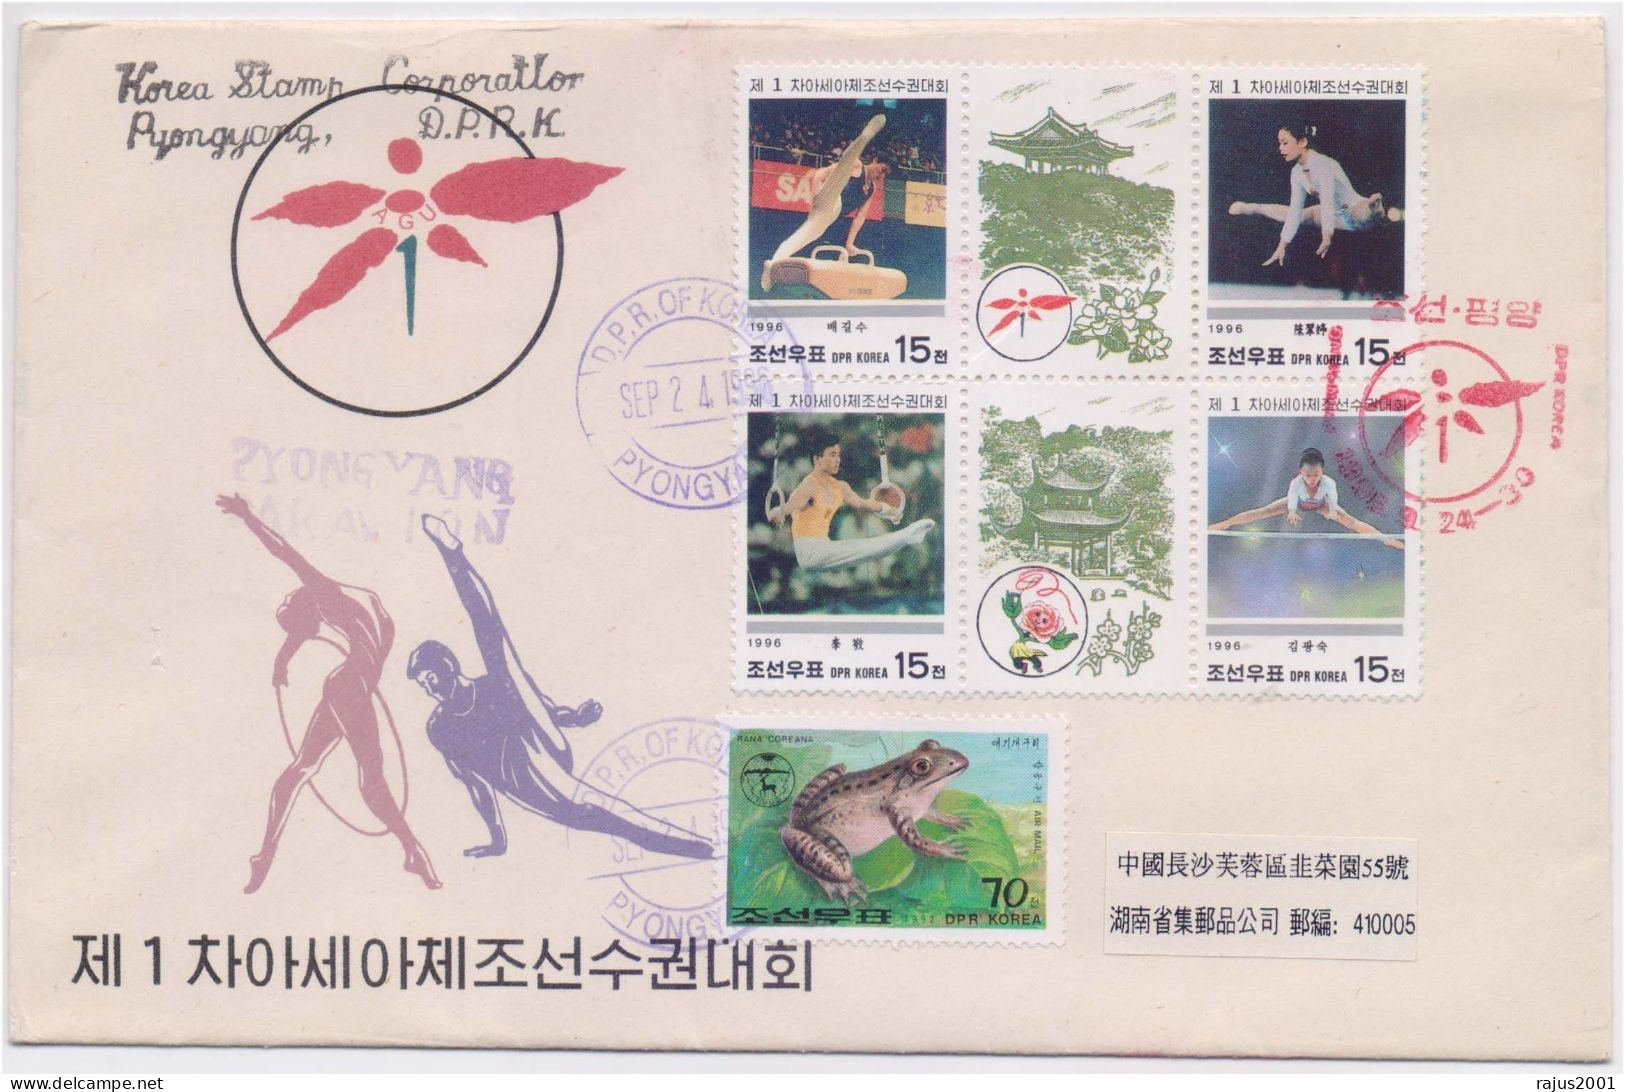 1st Asian Gymnastics Championships, Frog, Flowers, GUTTER PAIR NORTH KOREA DPR FDC 1996 - Gymnastics